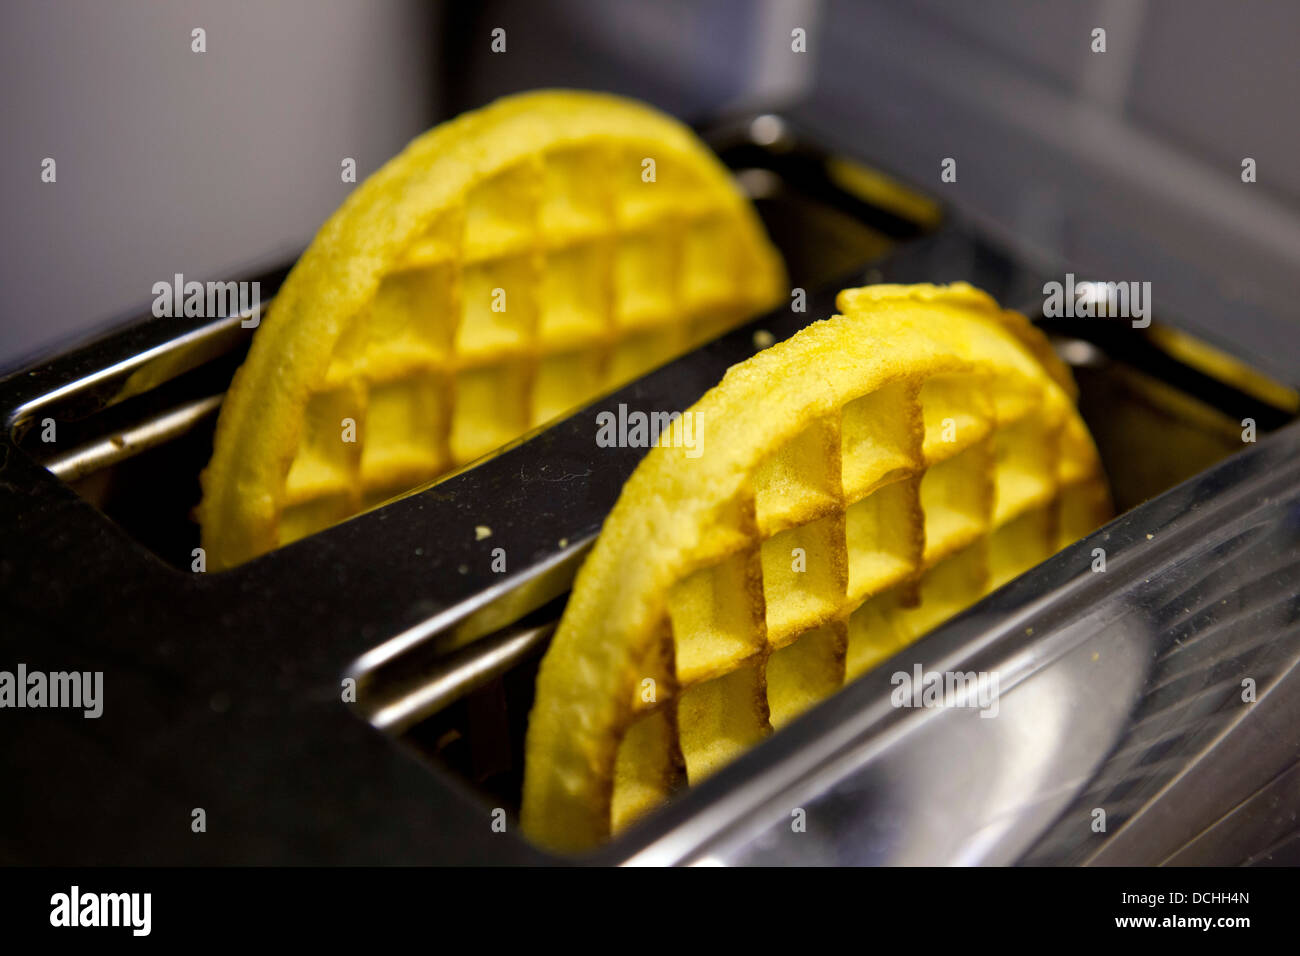 Two Kellog's Eggo breakfast waffles in a toaster Stock Photo